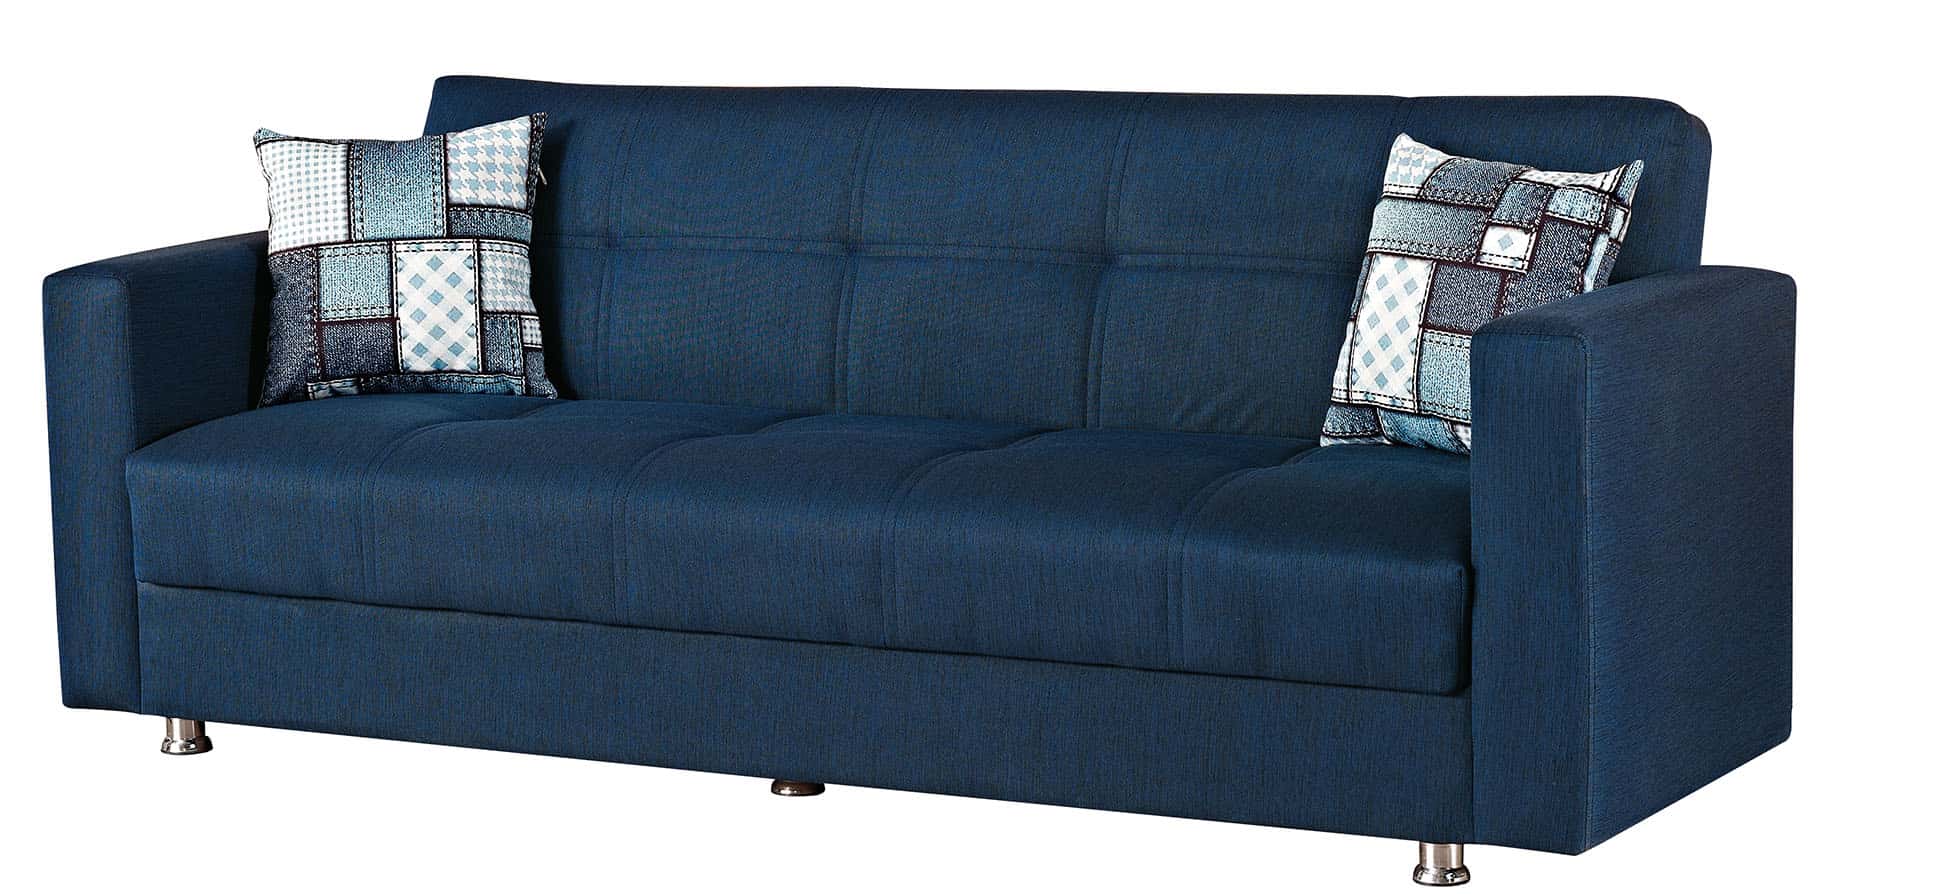 Miami Blue Fabric Sofa Bed by Empire Furniture USA